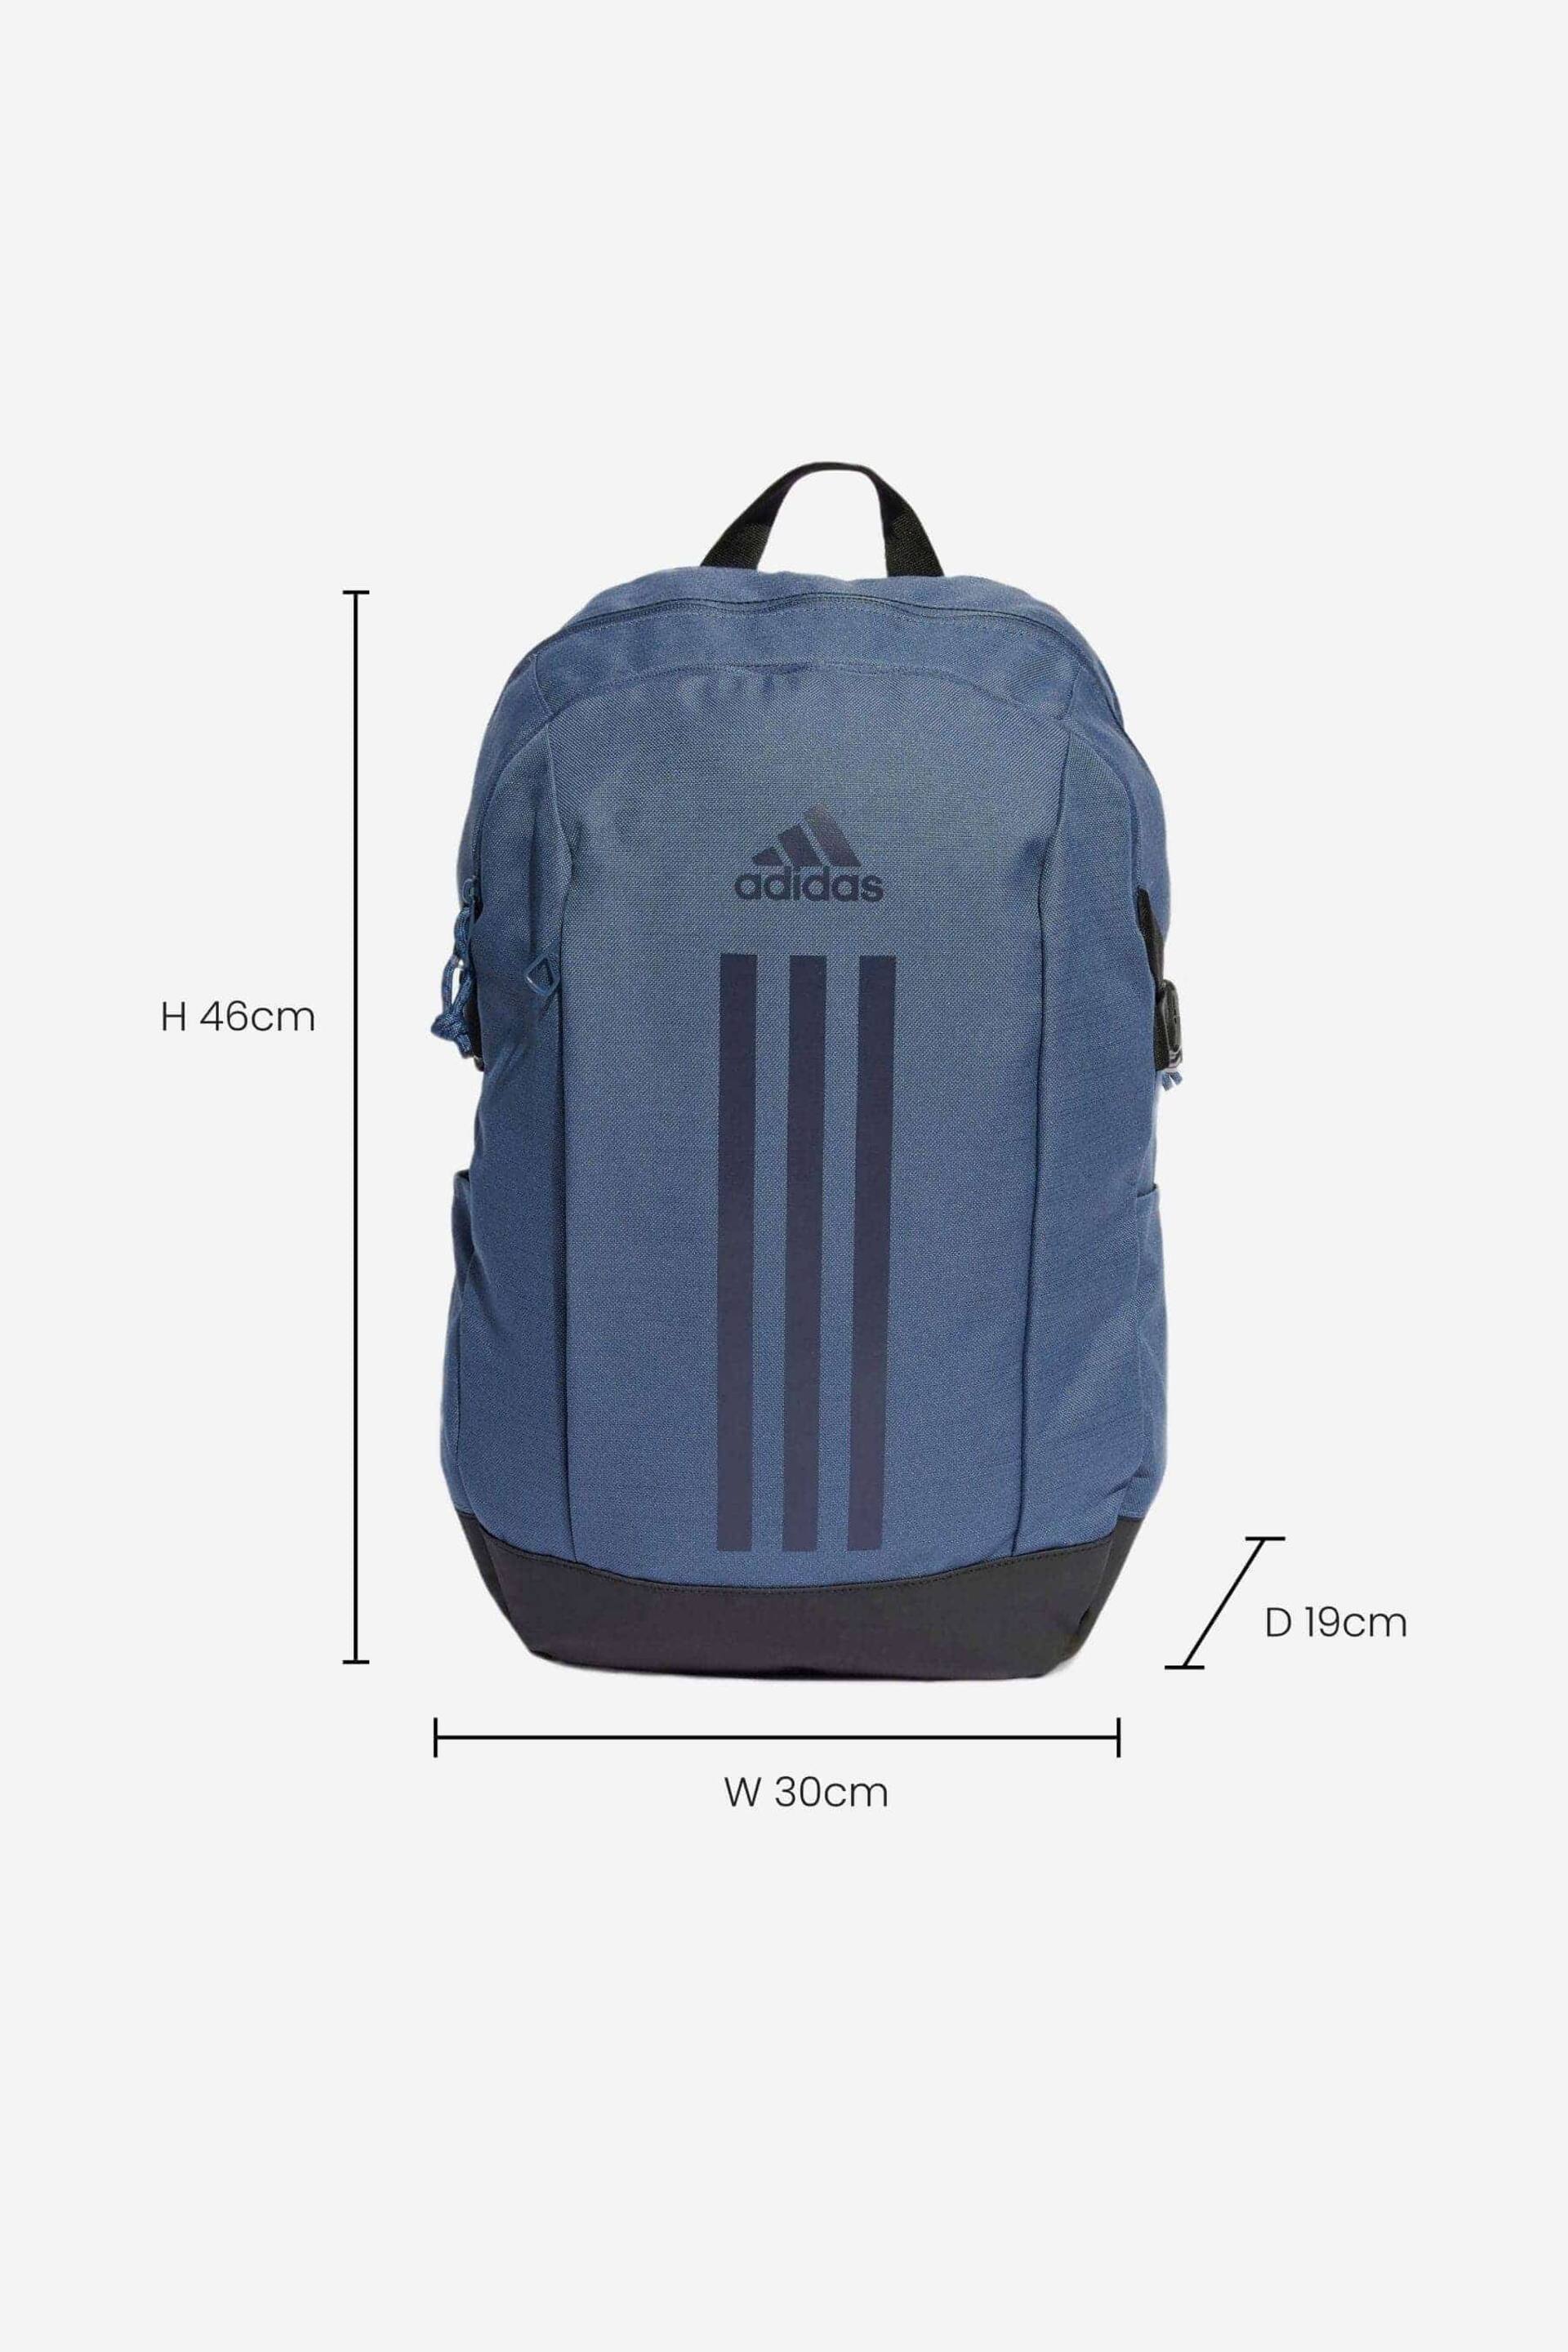 adidas Blue Power Backpack - Image 3 of 5